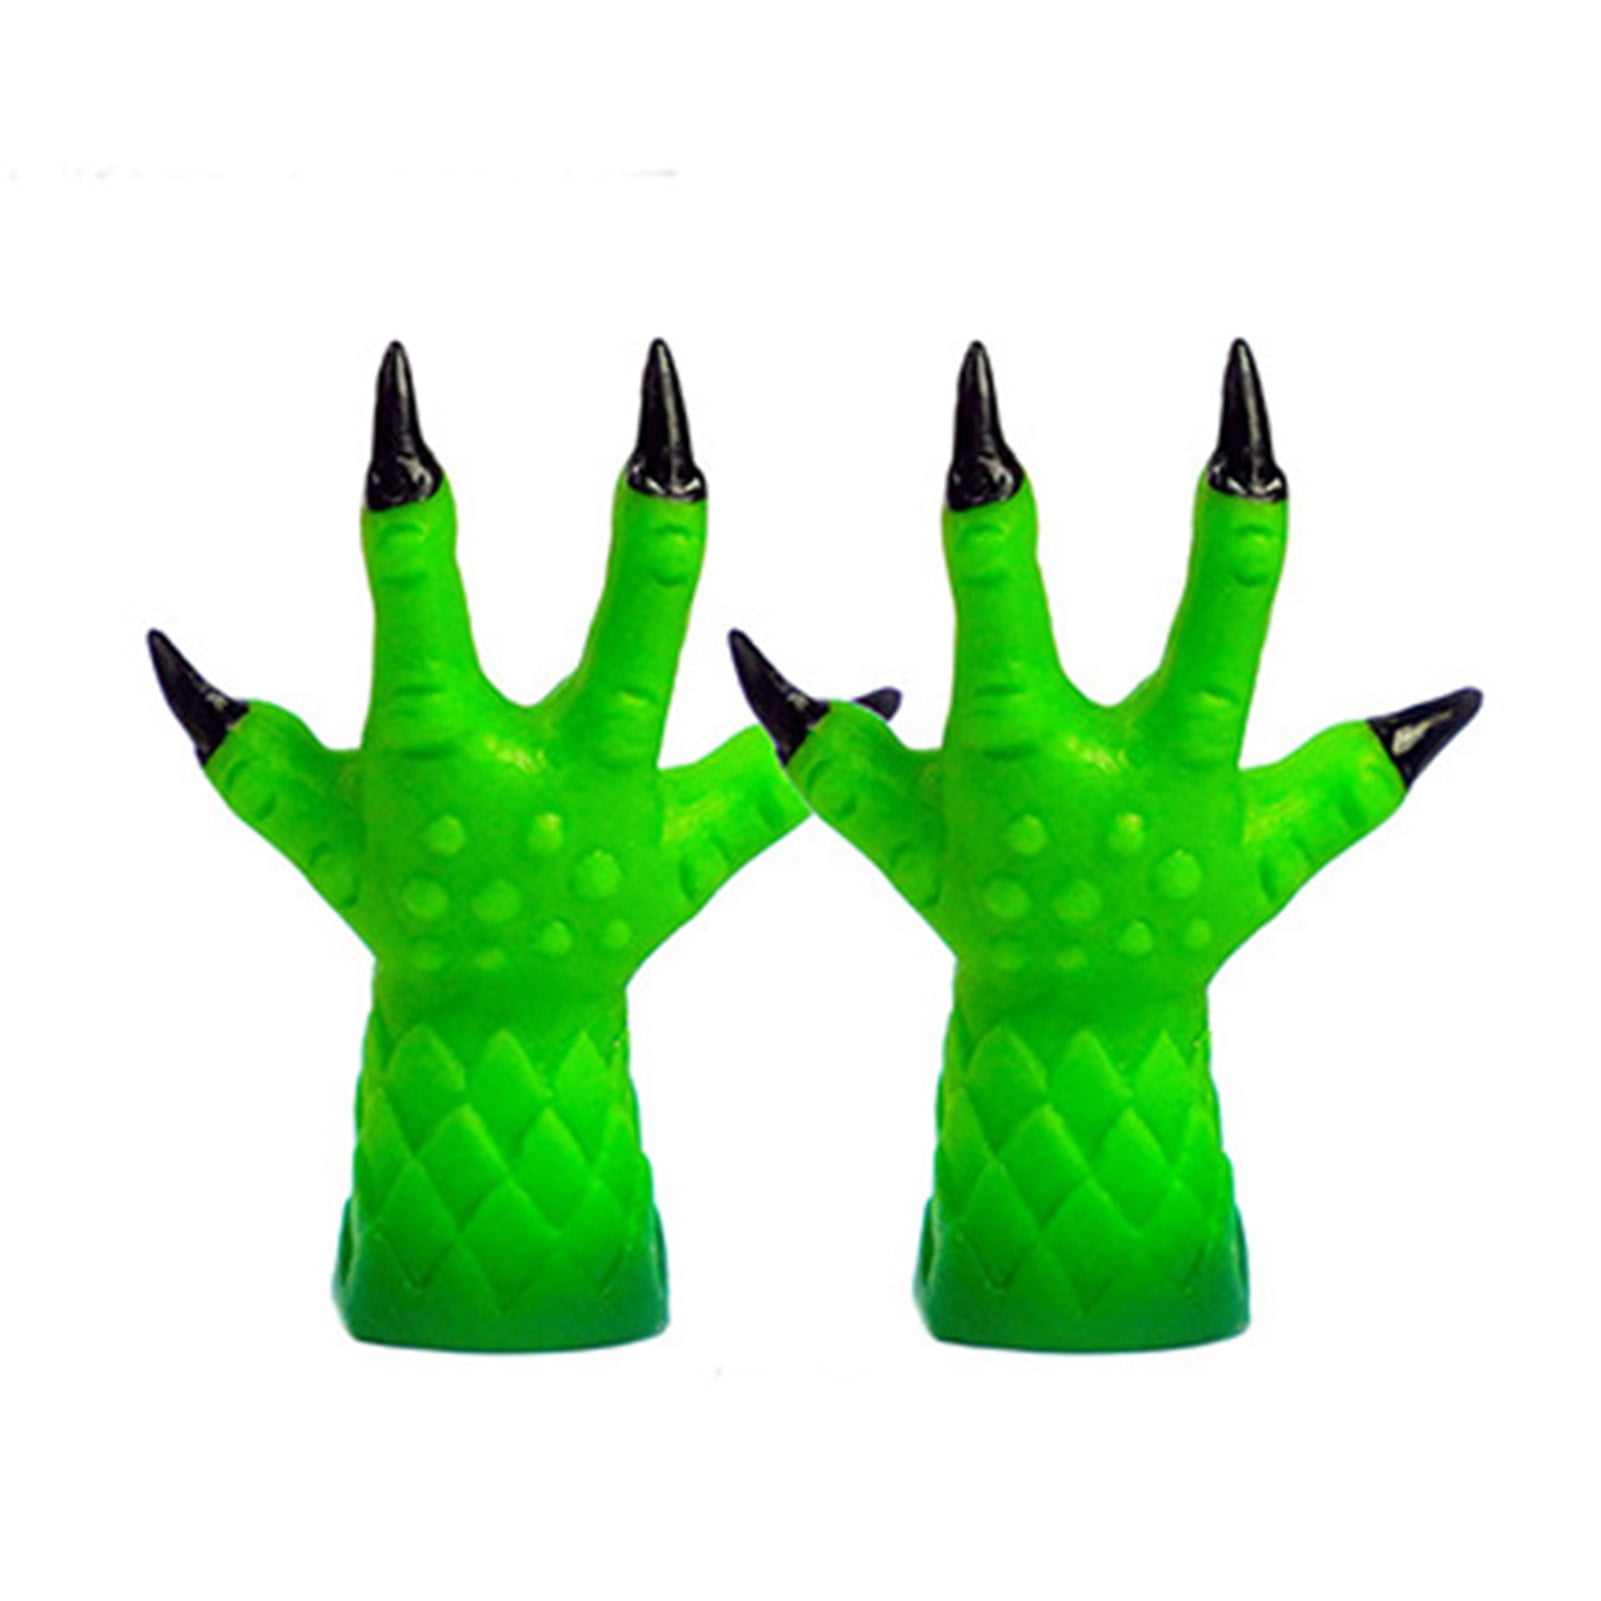 Details about   2pcs Joke Toy Nail Through Finger Prank Toy Trick Halloween Props Kids Children 